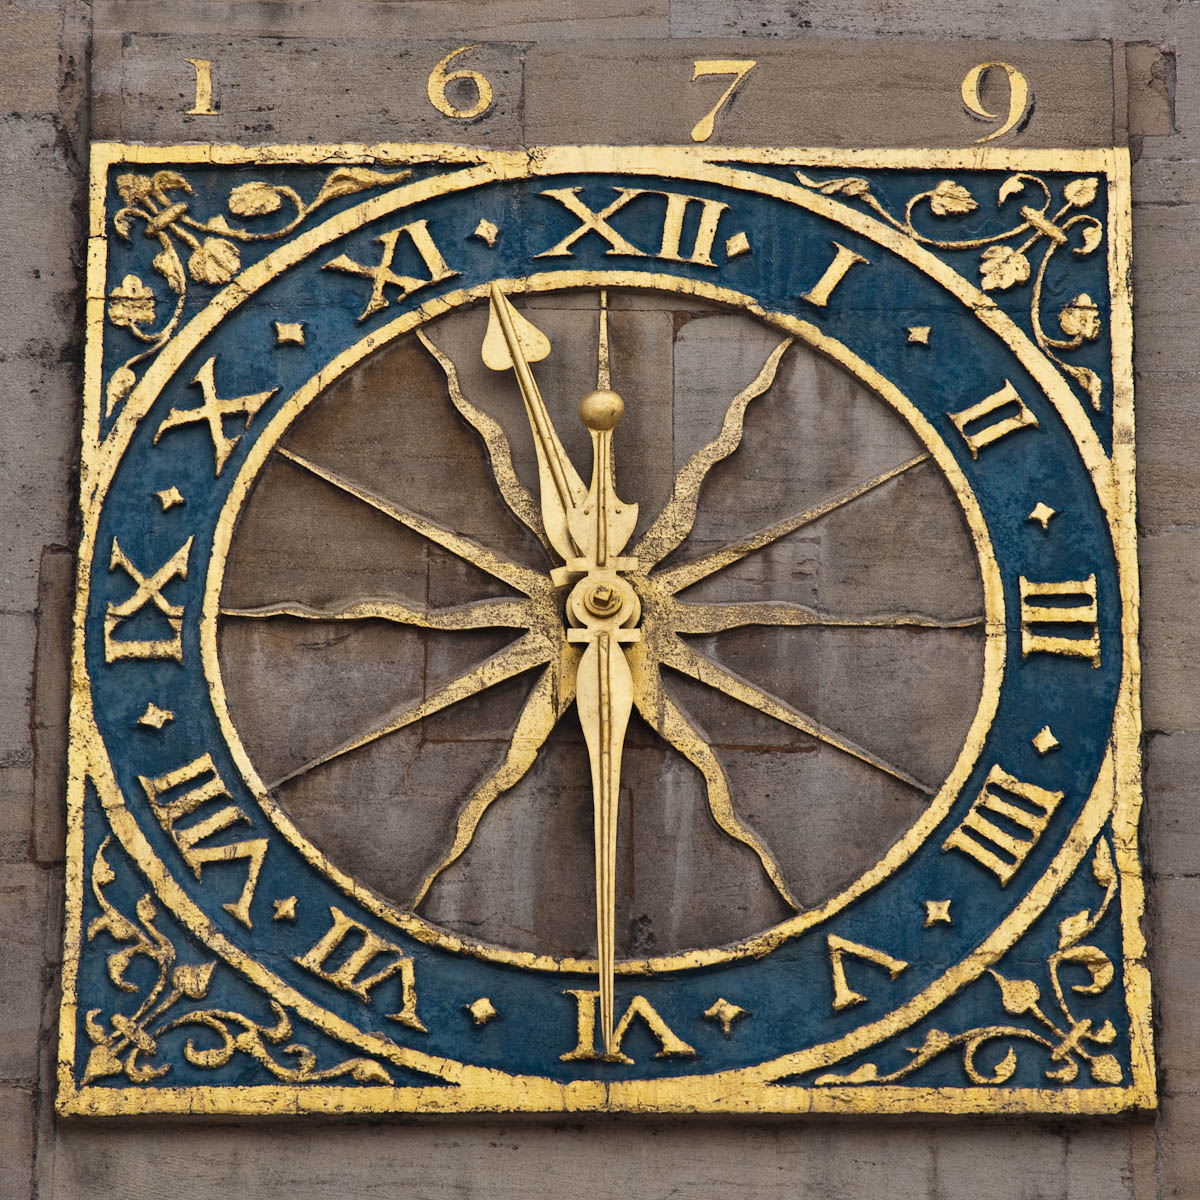 The Cambridge University Clock, set above the West door of Great St Mary's, Cambridge, England - www.rossiwrites.com